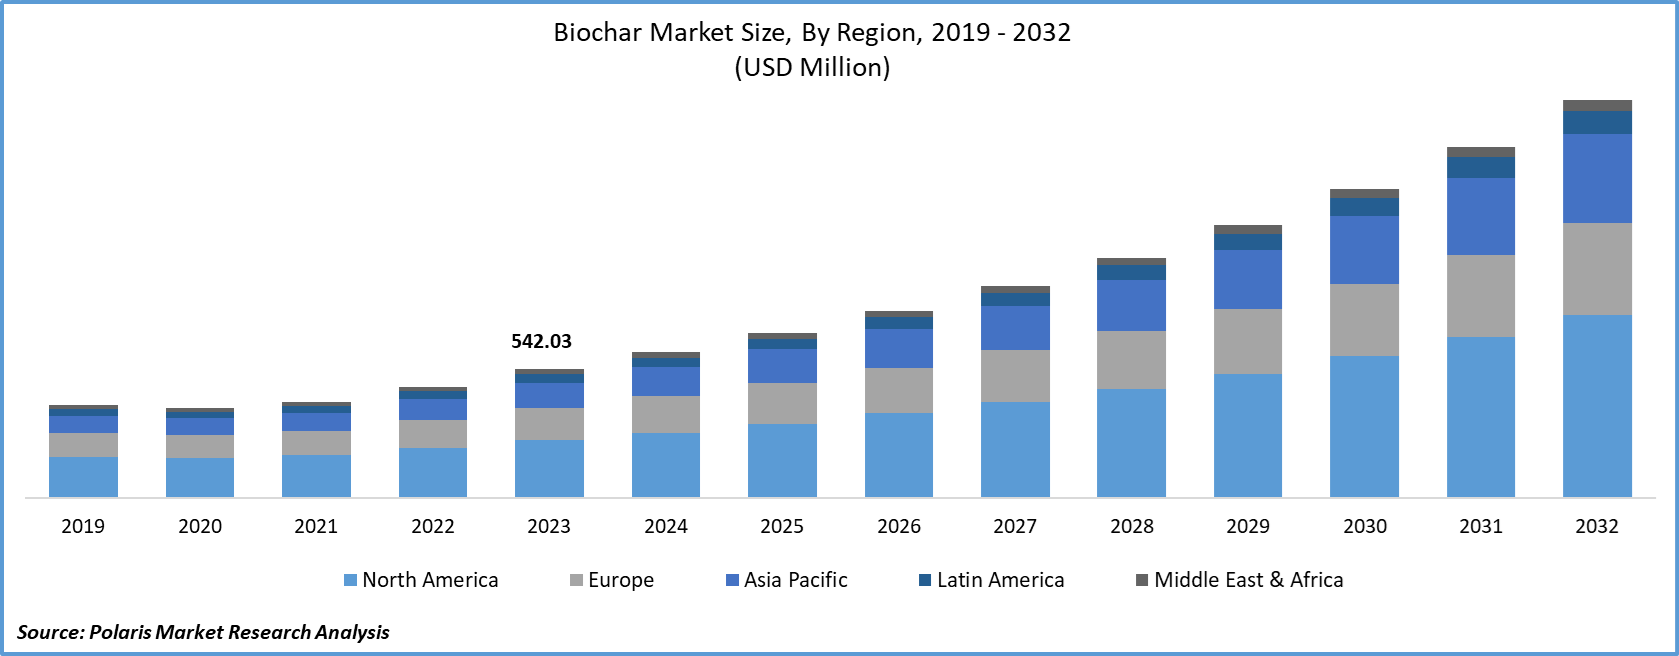 Biochar Market Size